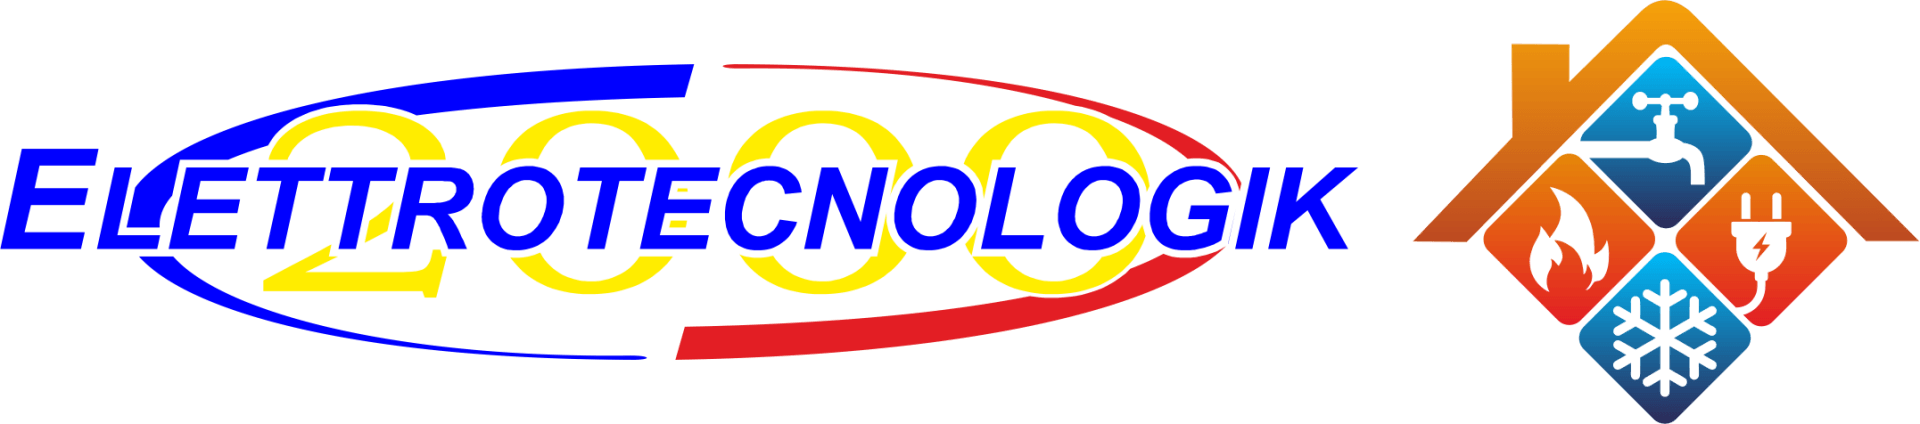 ELETTROTECNOLOGIK 2000 - LOGO